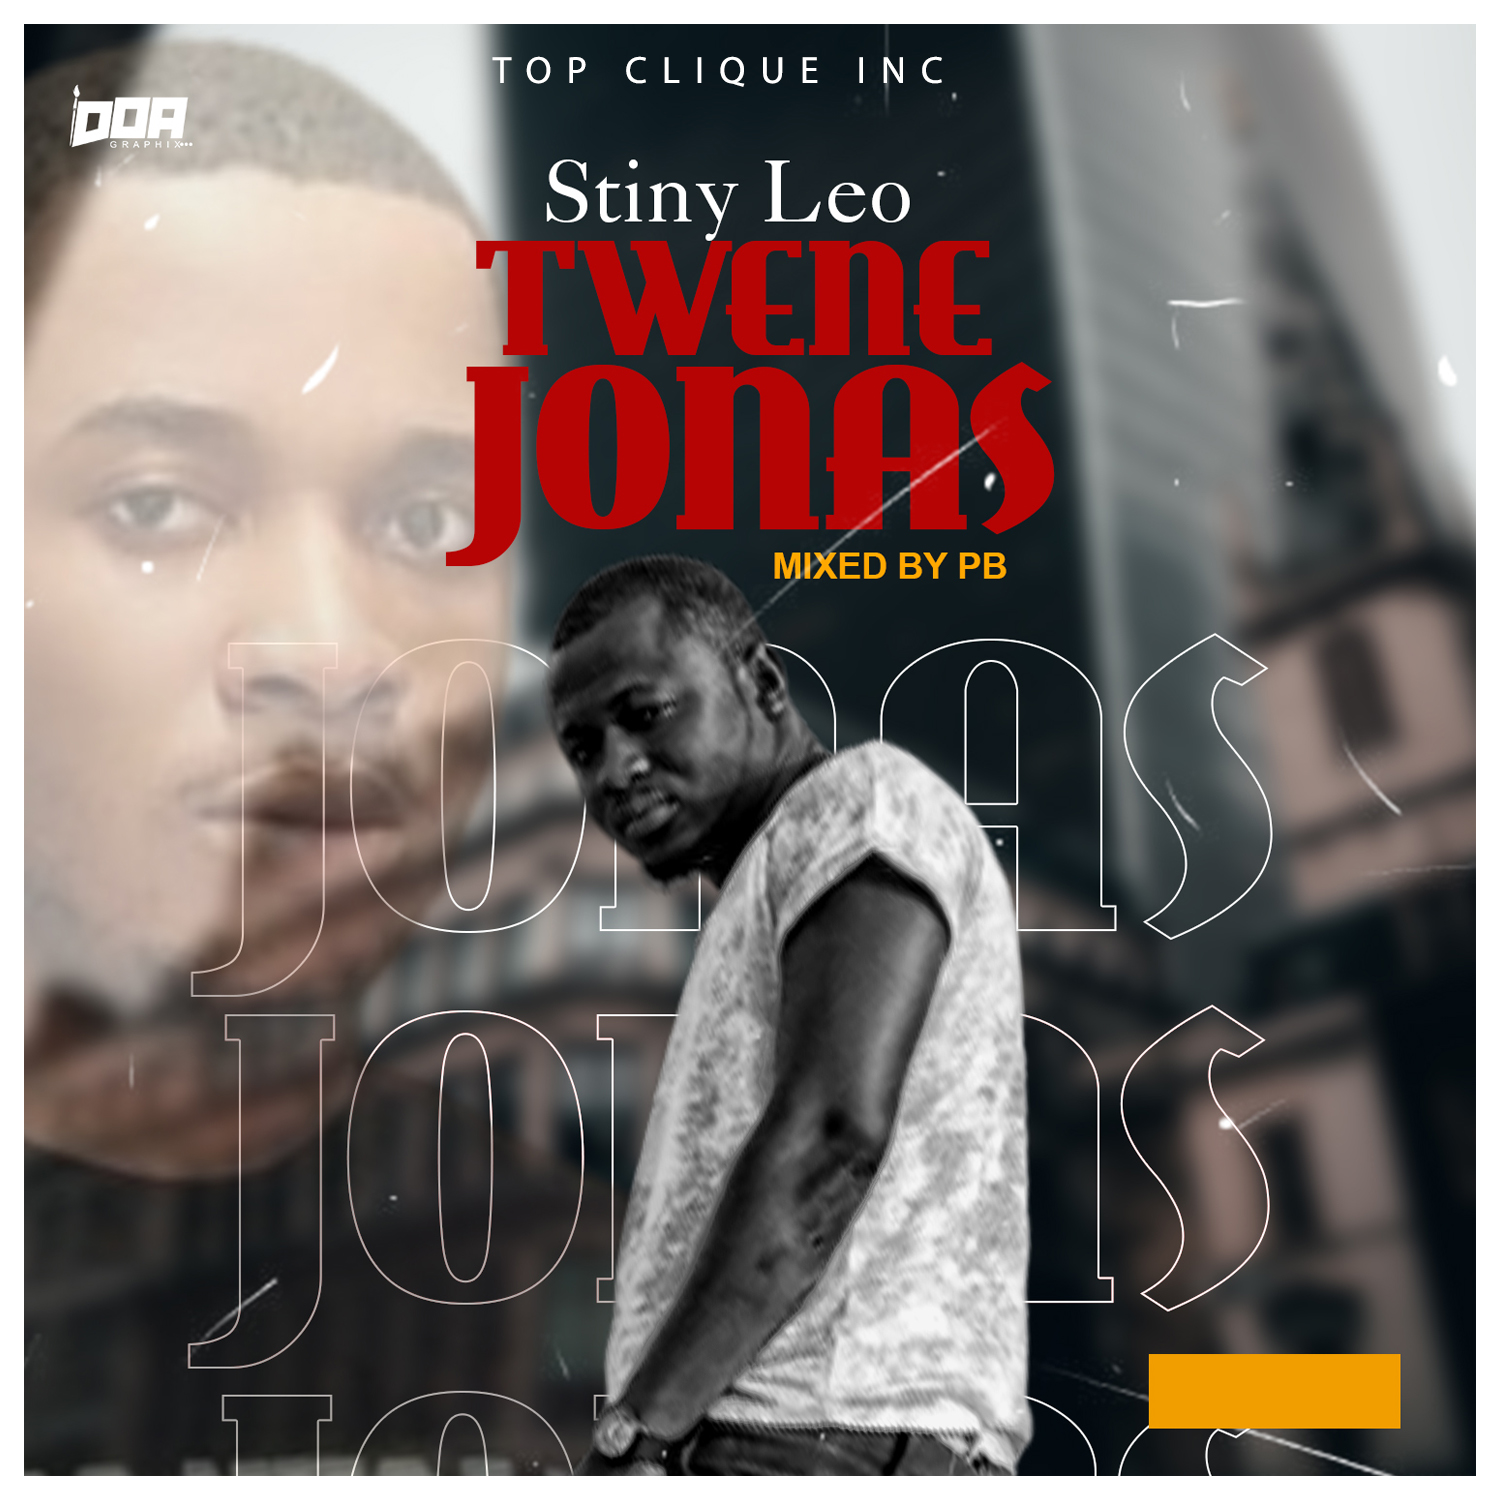 Stiny Leo - Twene Jonas (Mixed By PB) 13